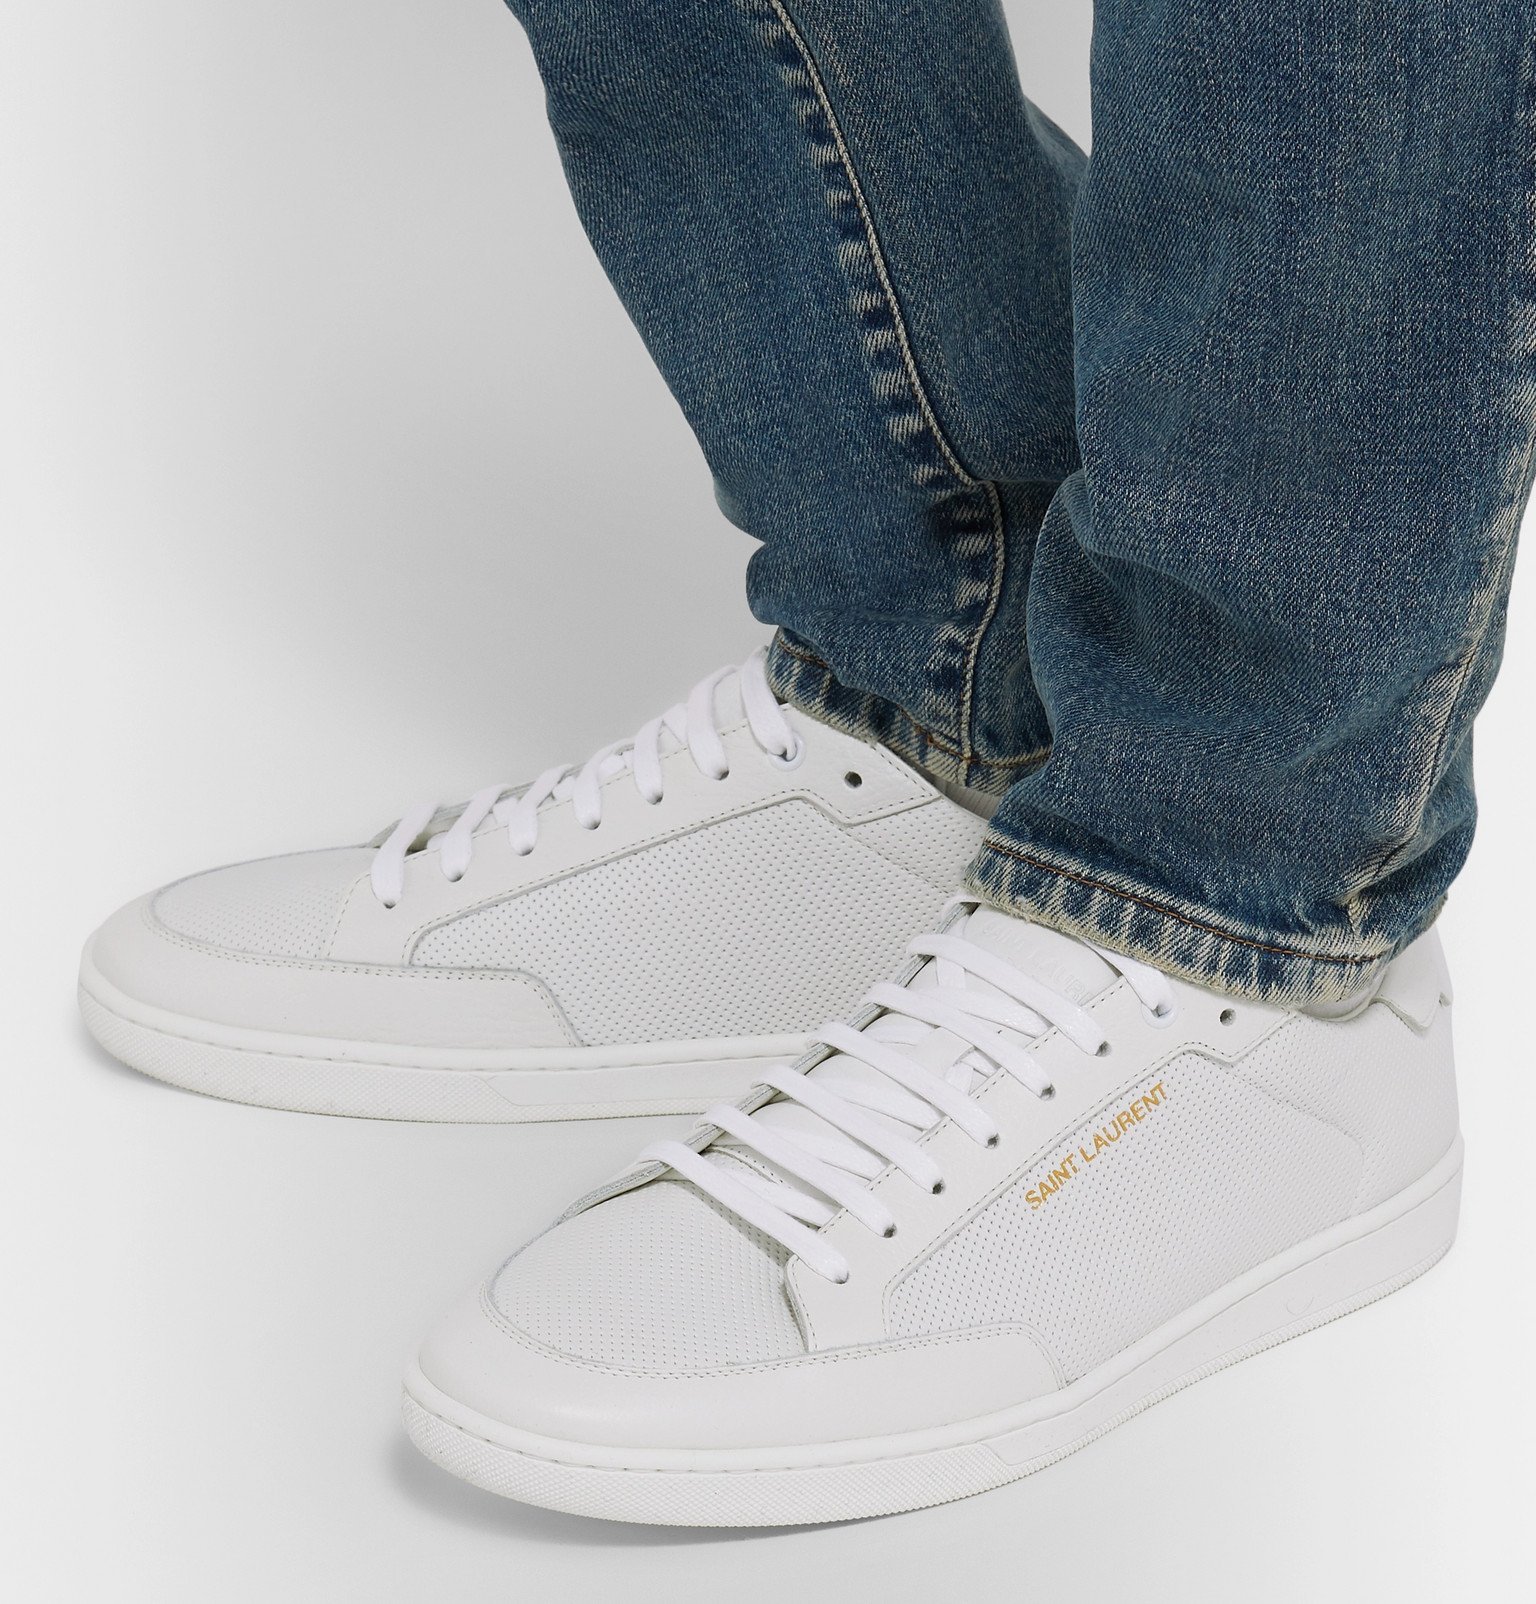 SAINT LAURENT - SL/10 Perforated Leather Sneakers - White Saint Laurent